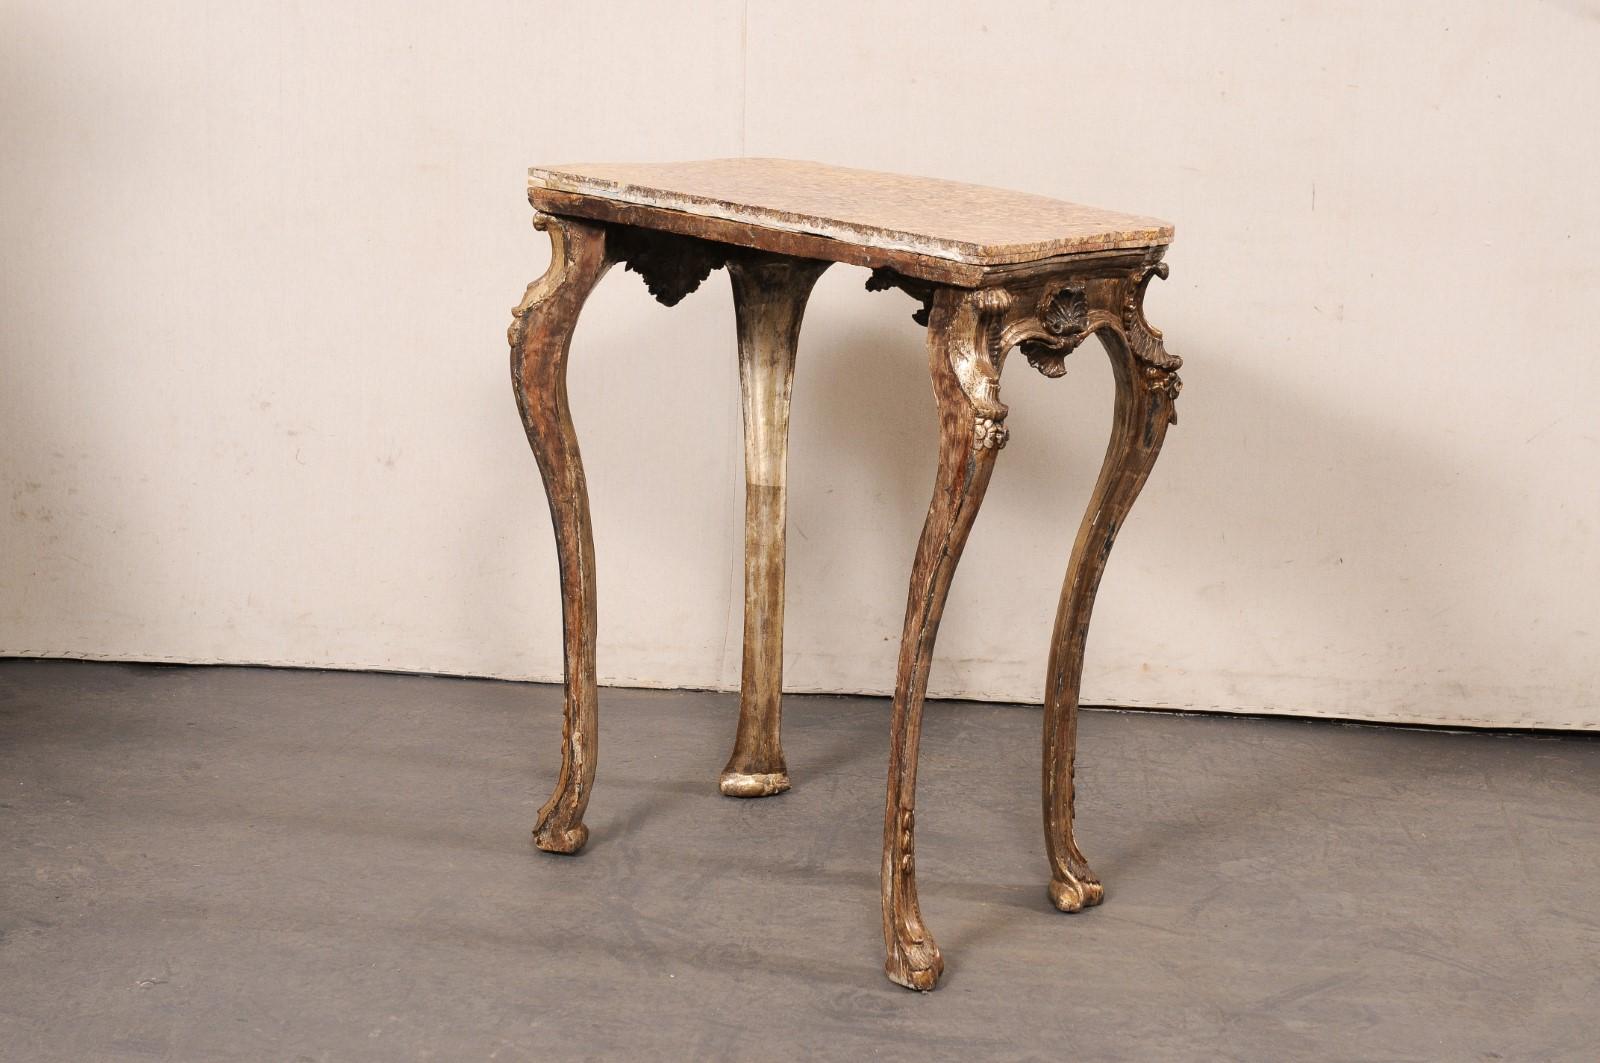 Italian Period Rococo Ornate Accent Table w/its Original Finish & Marble Top For Sale 2